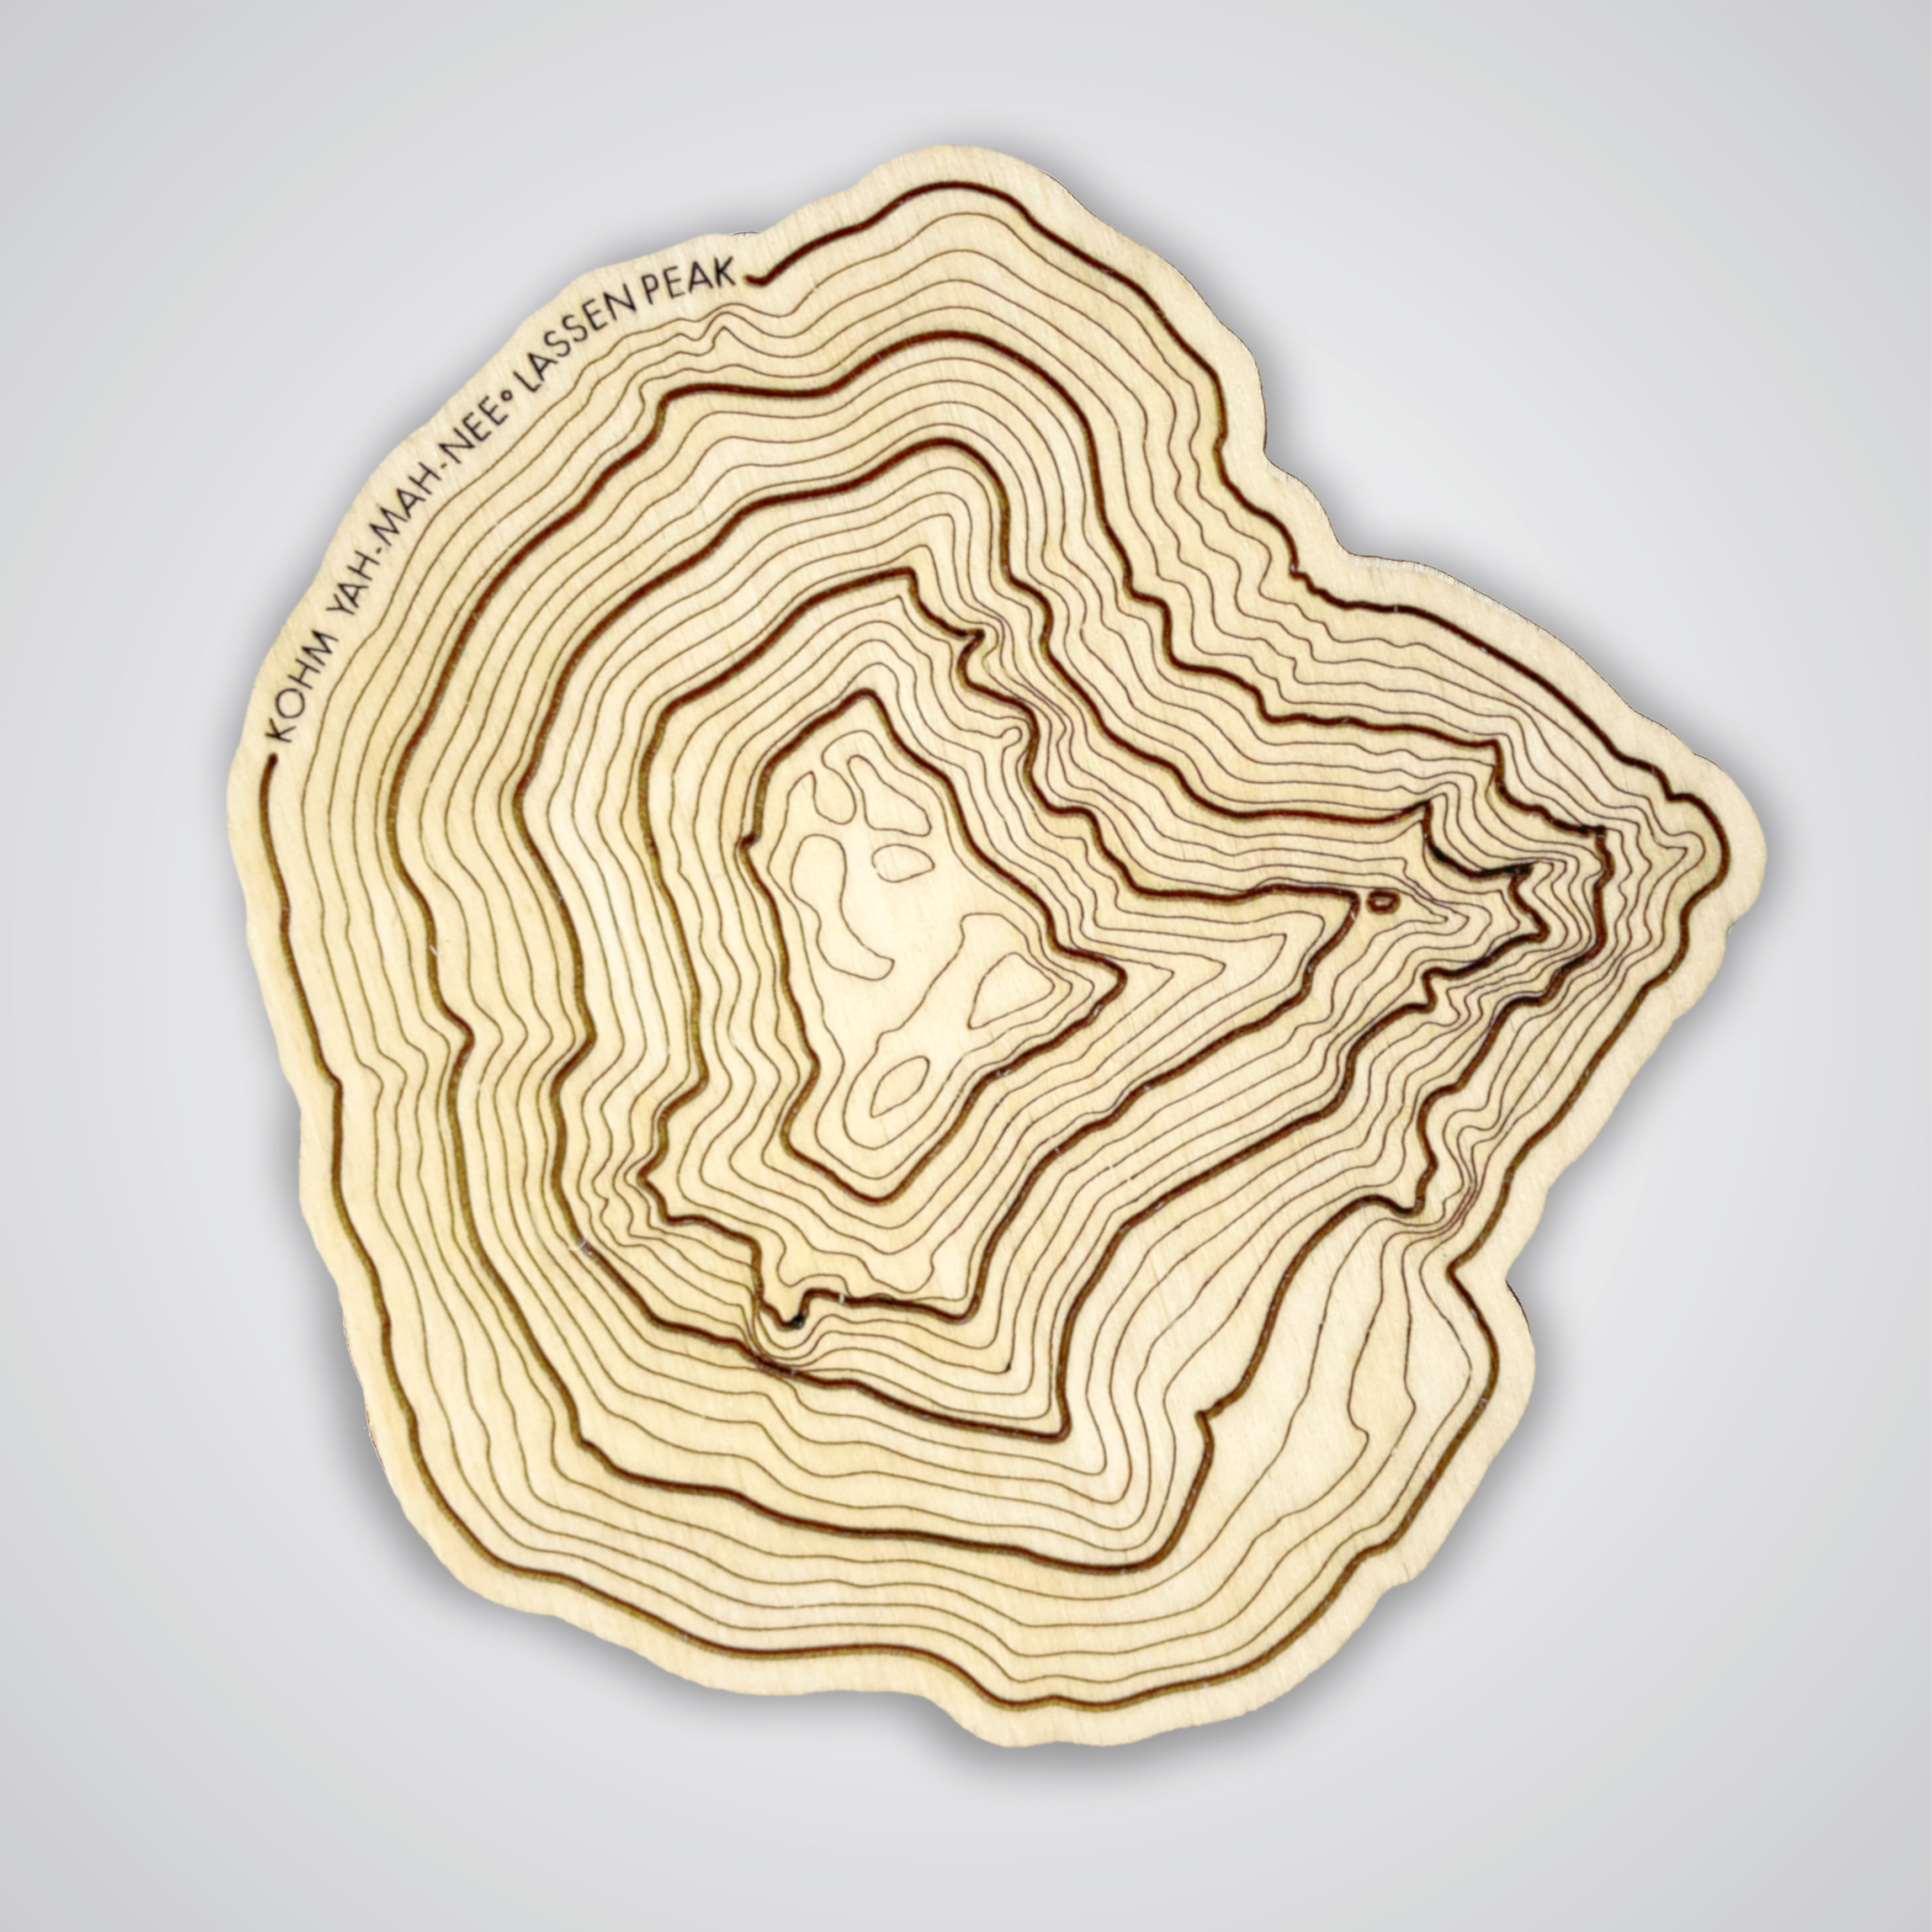 Lassen Peak Topography Coaster - Single